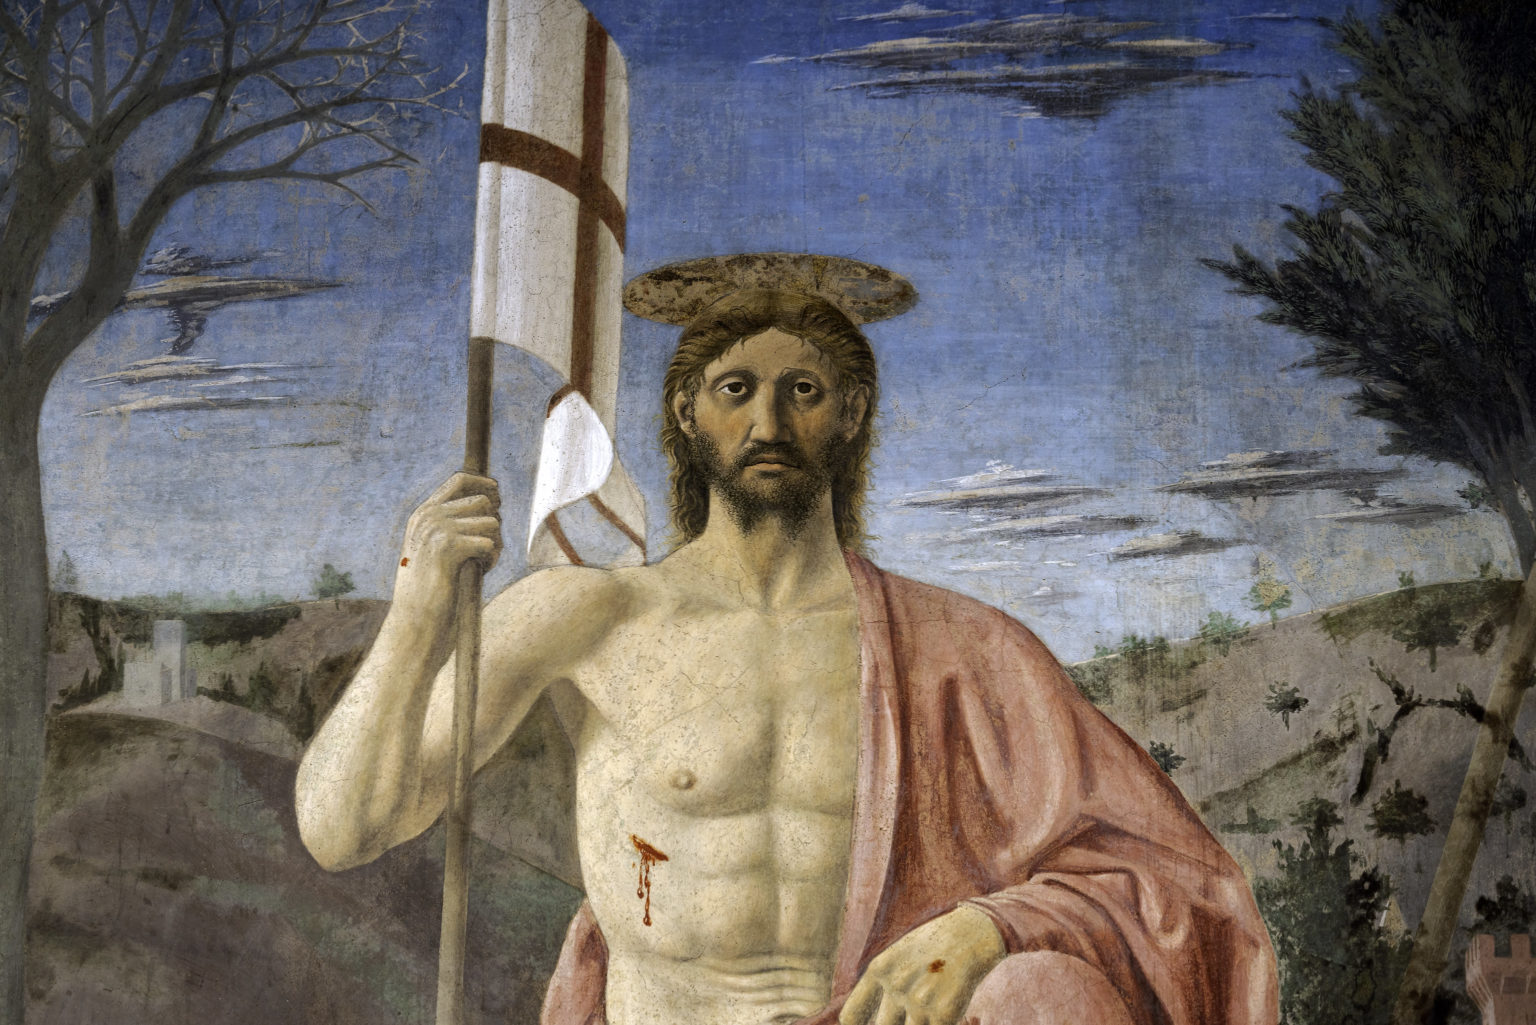 3. "The Resurrection" by Piero della Francesca - wide 9